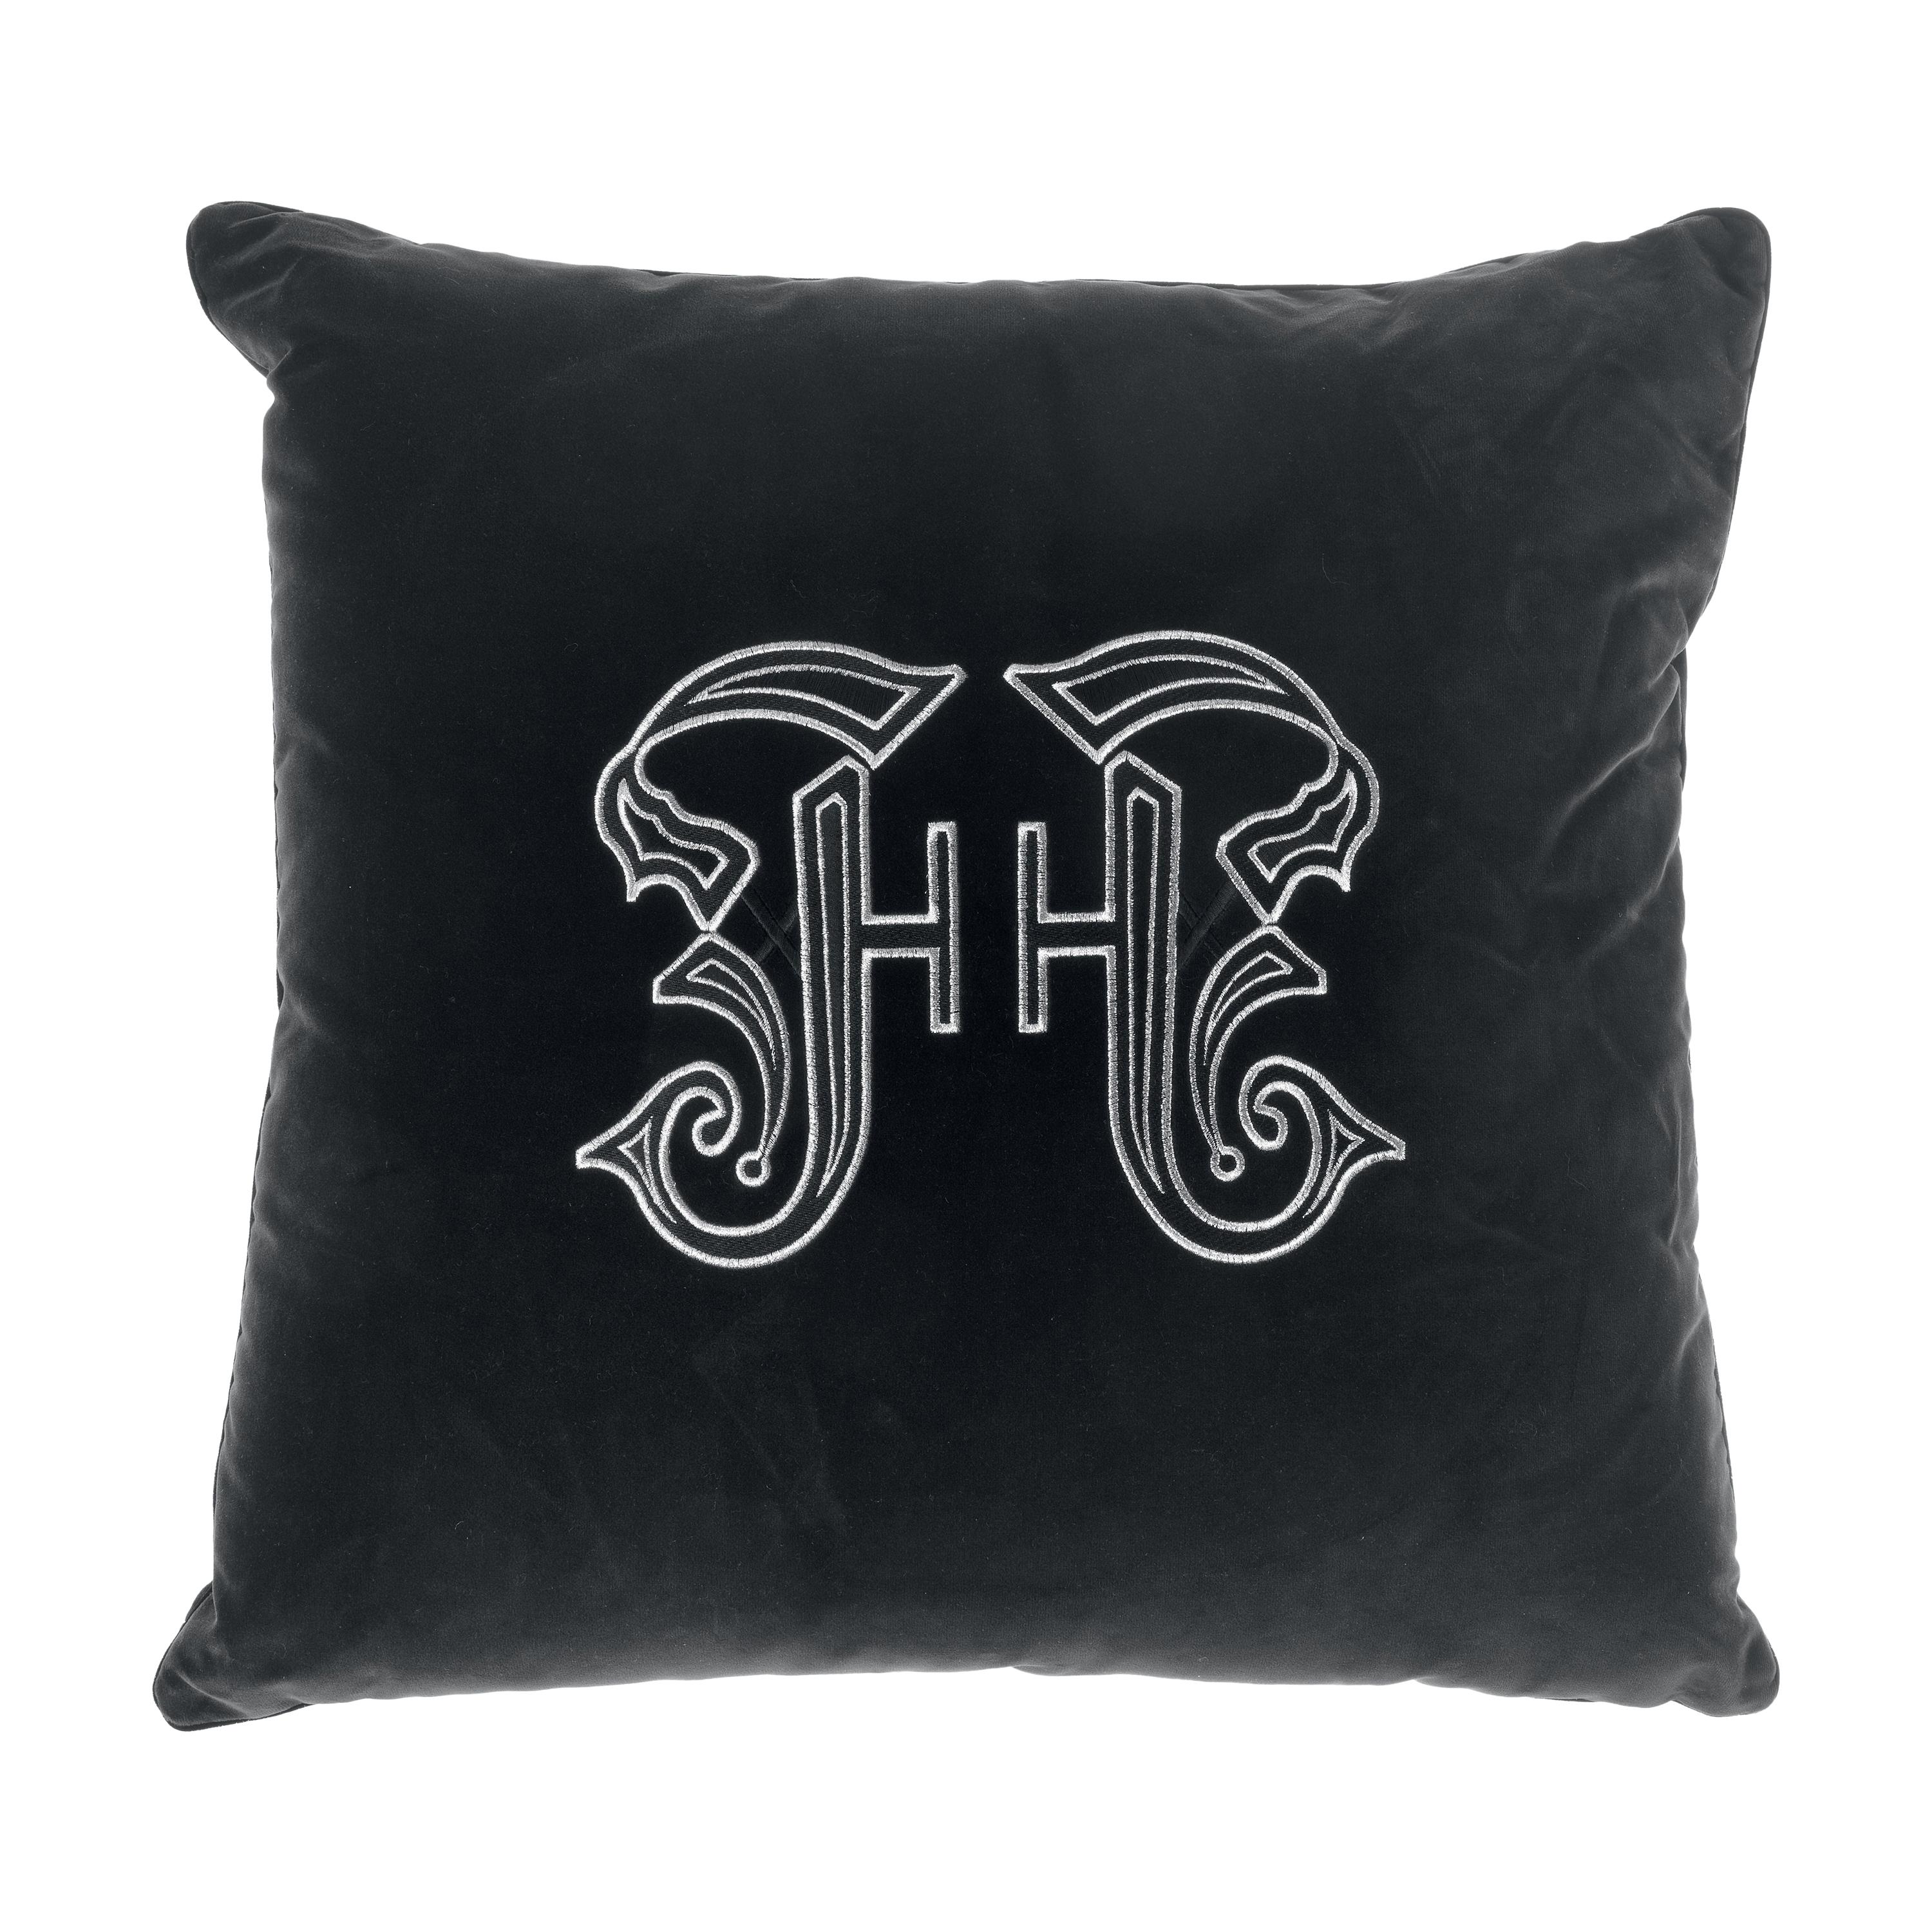 21st Century Gothic Lamé Black Cushion in Velvet by Gianfranco Ferré Home